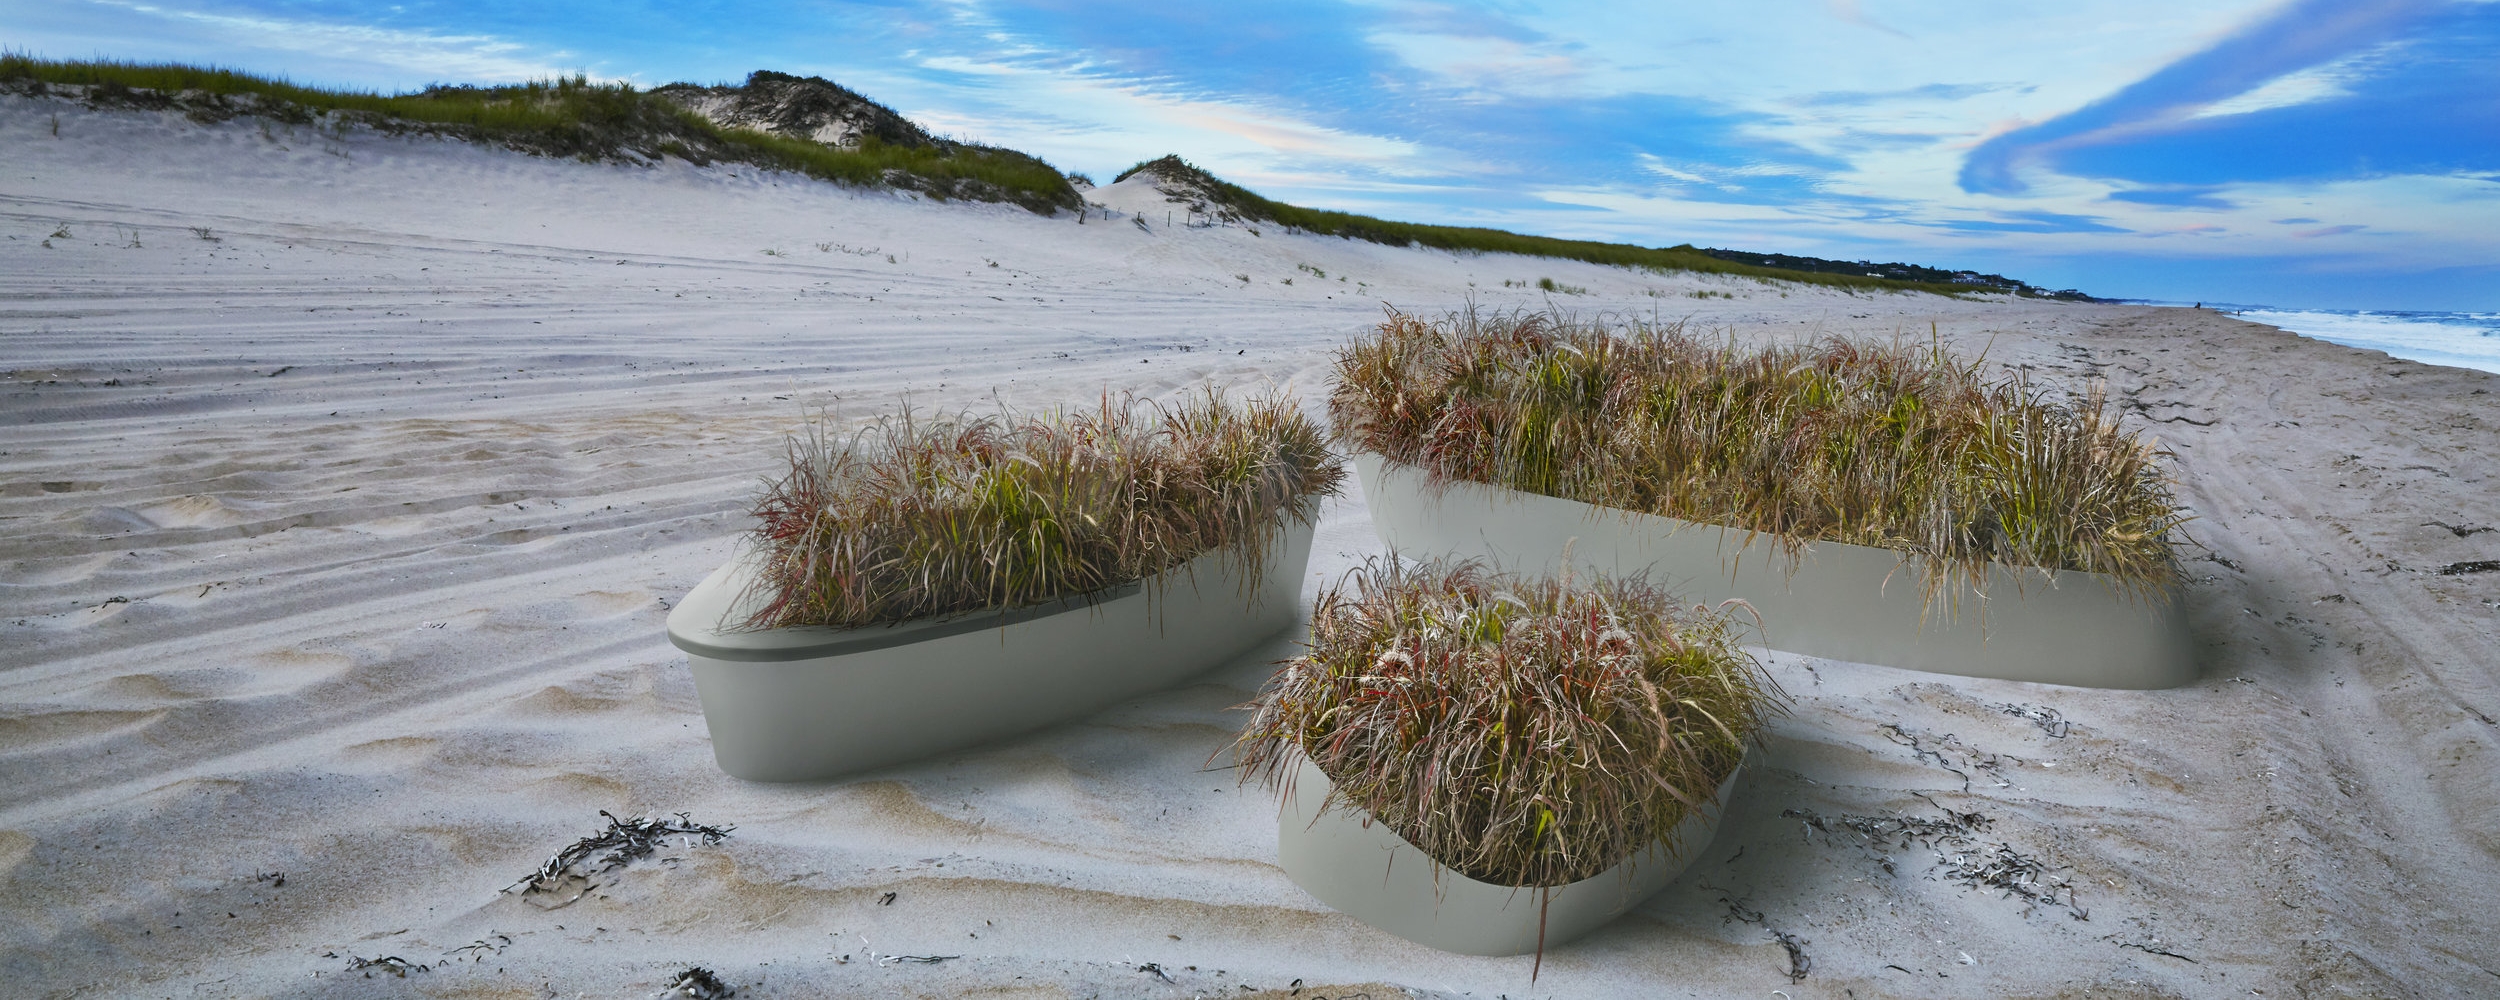 1 dune 2015-0921_dunes-hero-plants-090_REV4.jpg